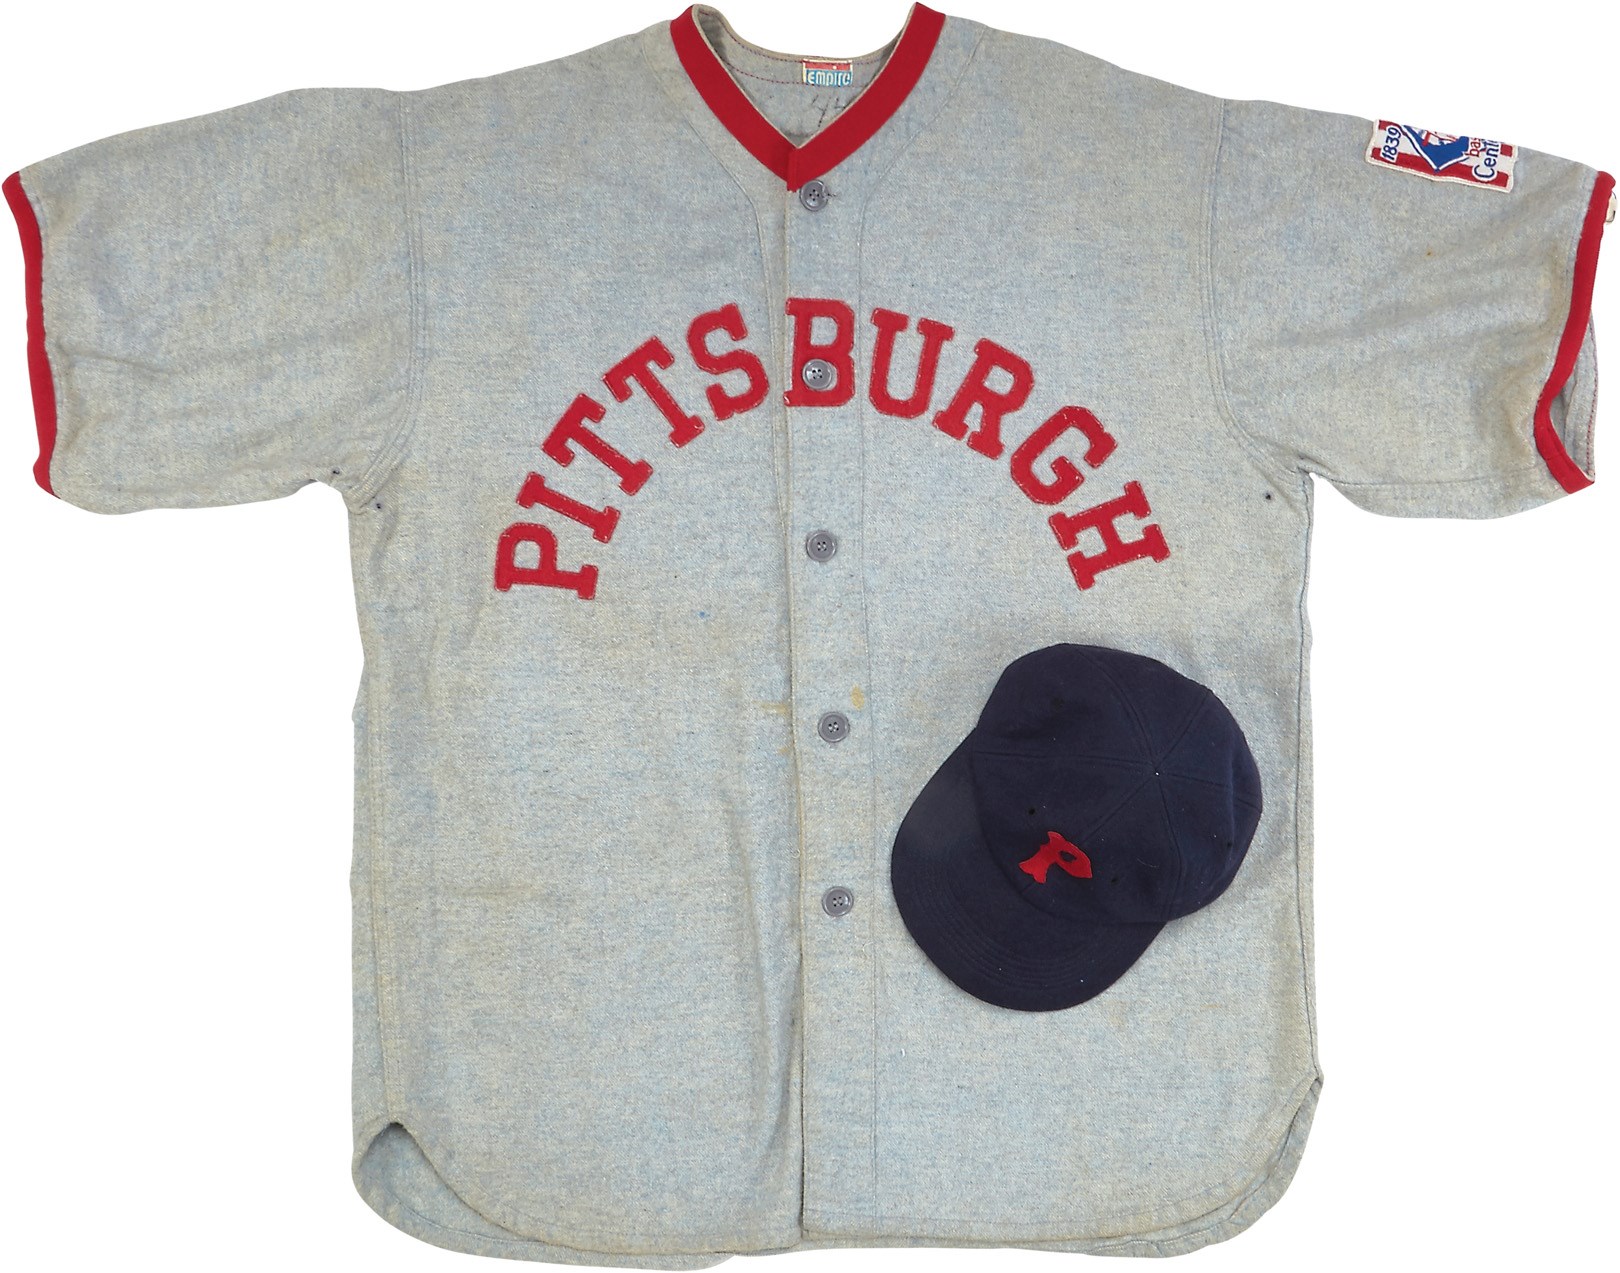 Baseball Equipment - The Natural "Final Home Run" Pitcher's Screen Worn Jersey & Cap (Photo-Matched)